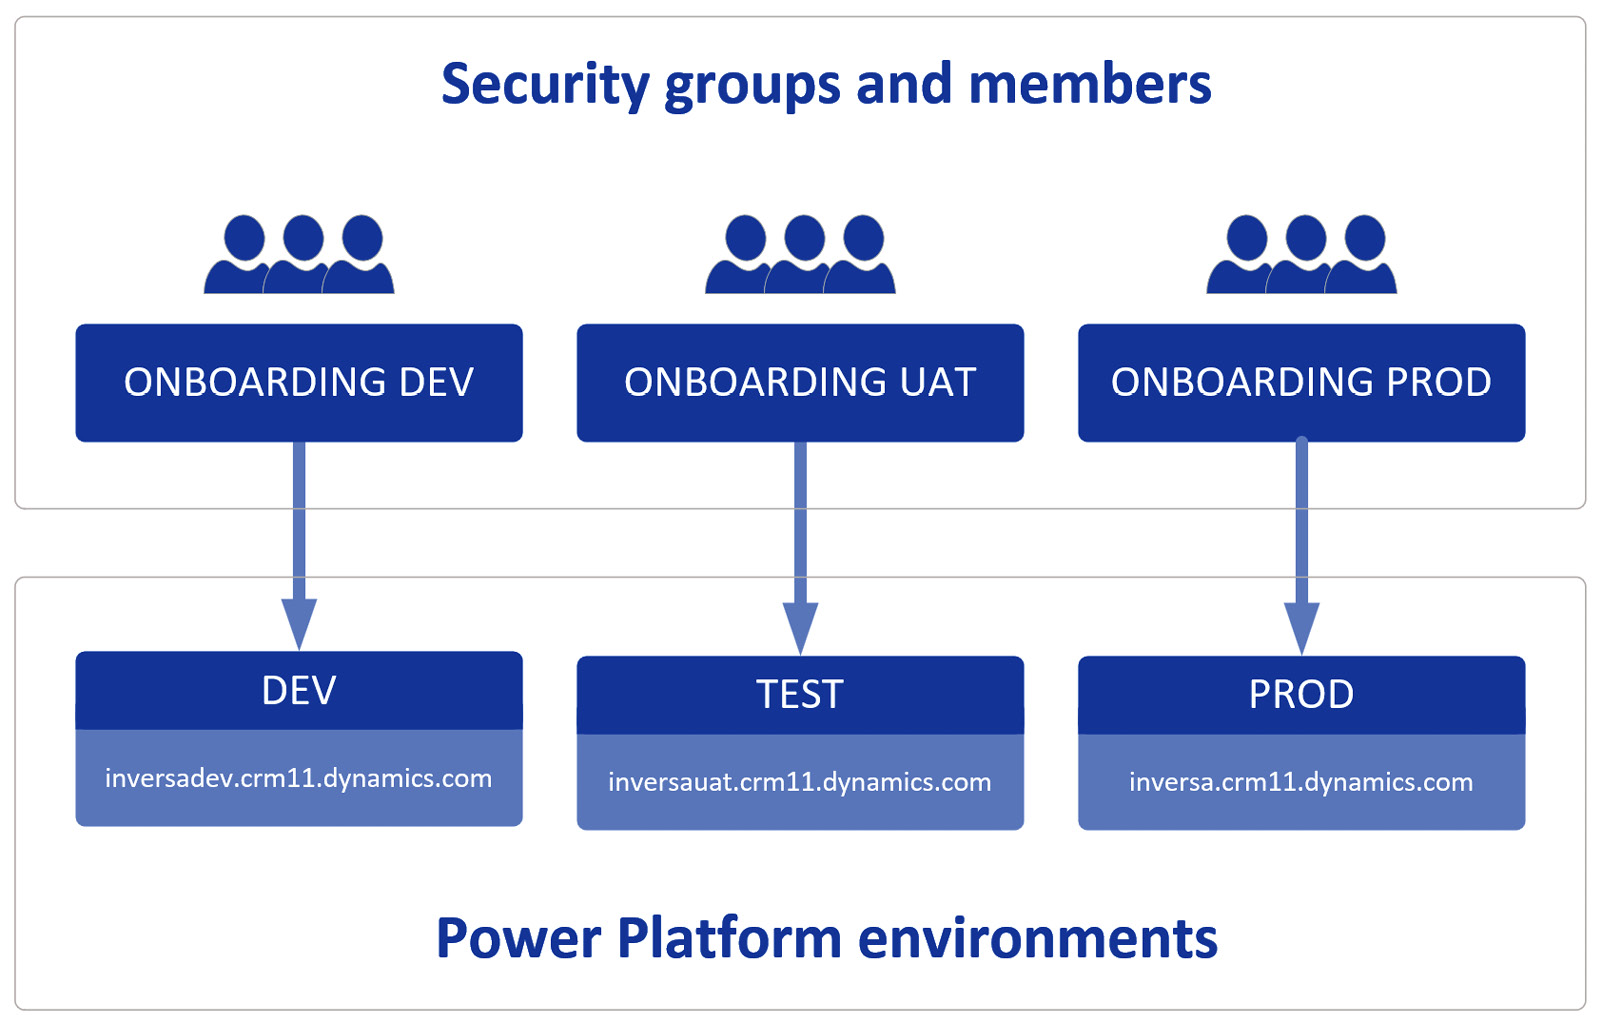 Figure 11.1 – Example Power Platform security group environment configuration
